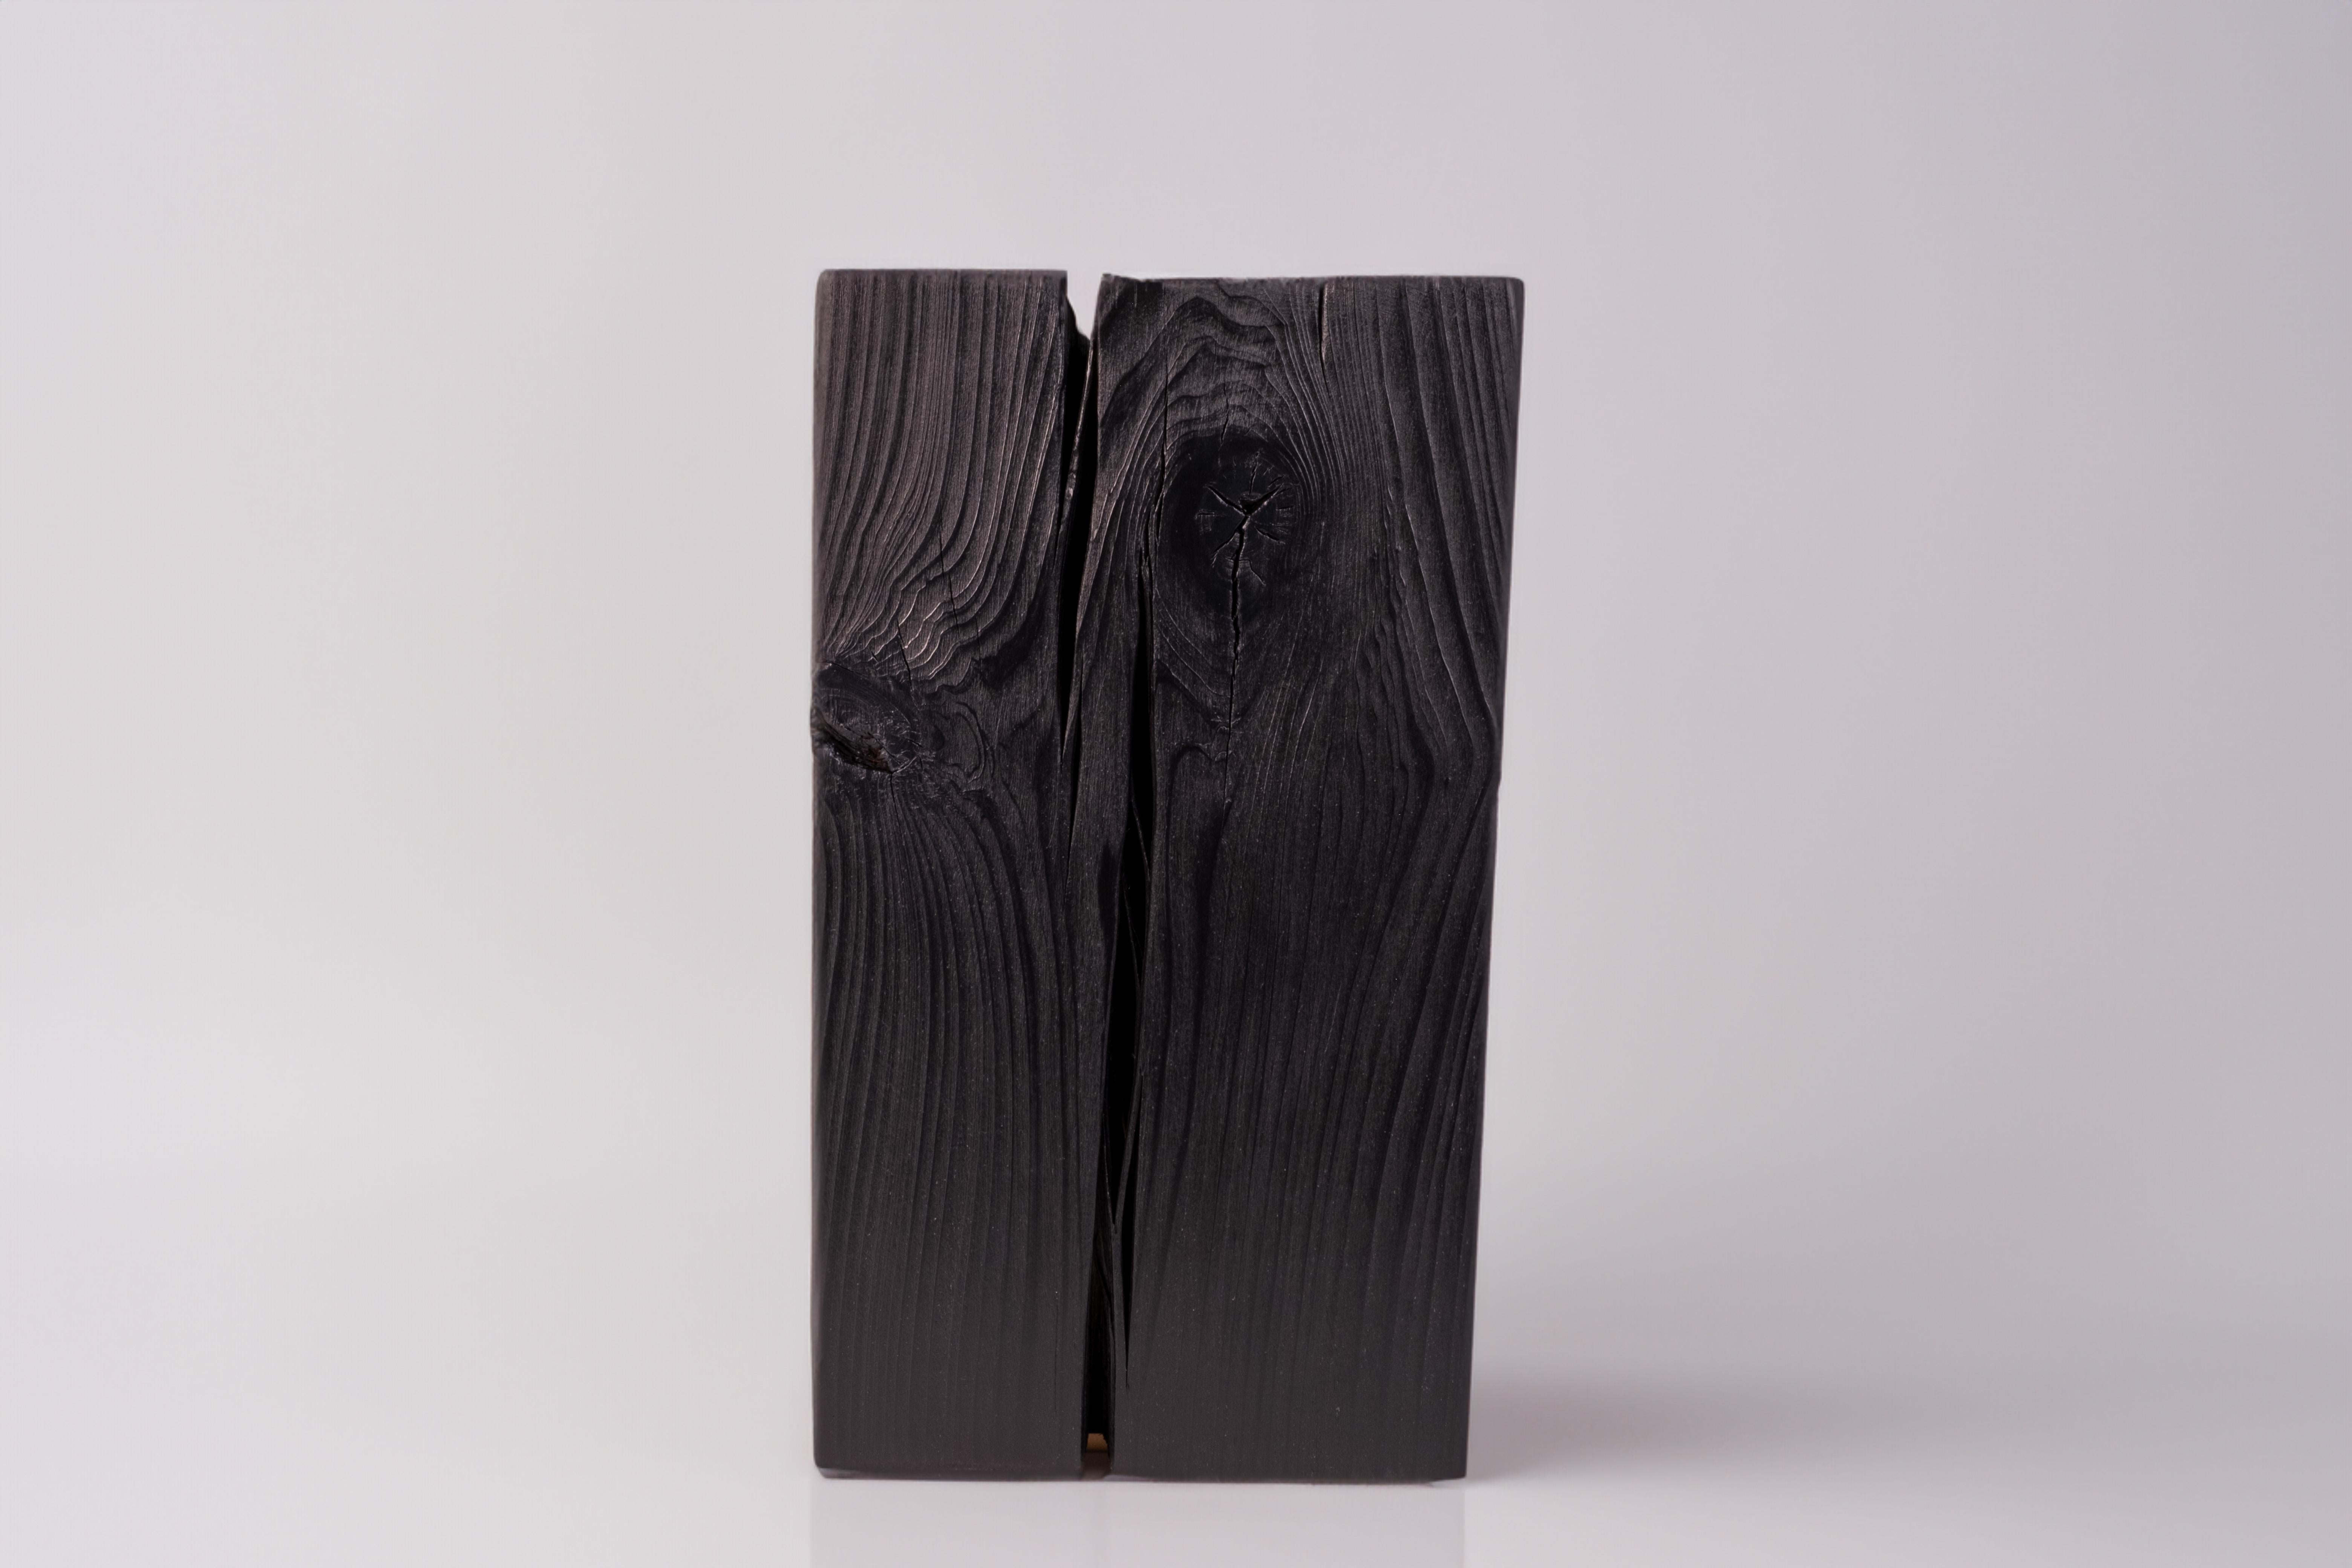 Blackened Ebonized Cypress For Sale